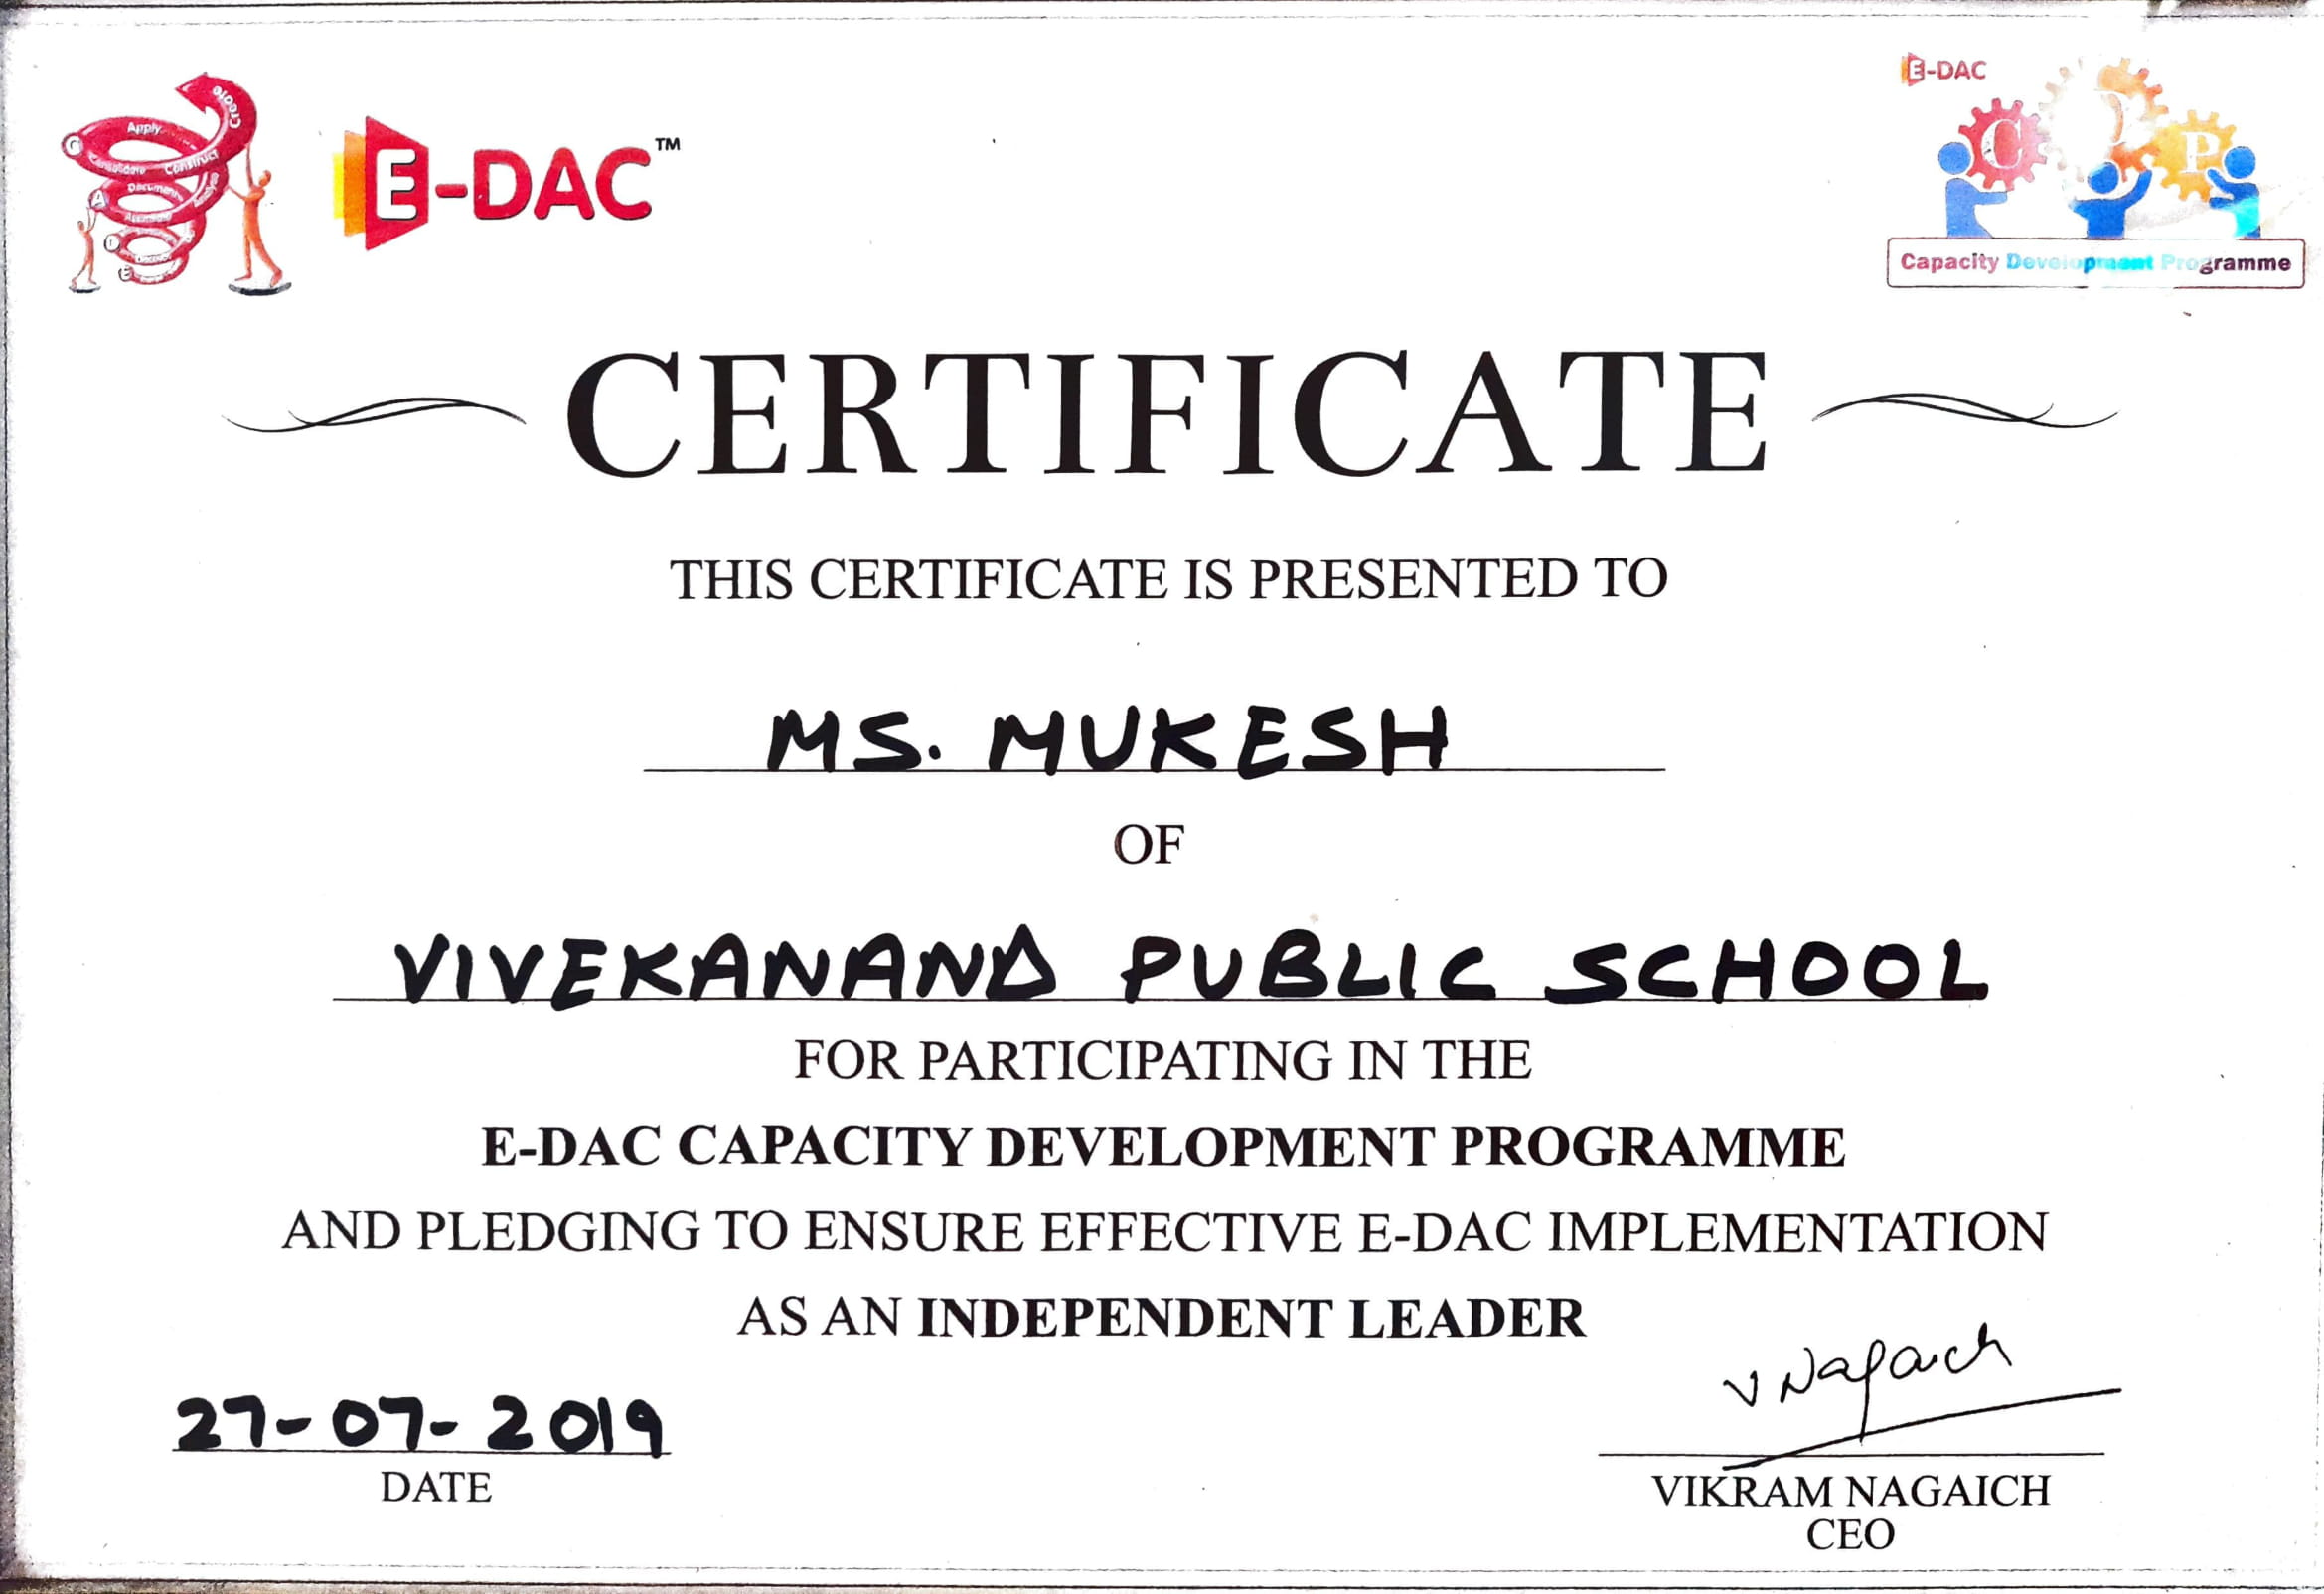 Vivekanand Public Teachers Training Certificate